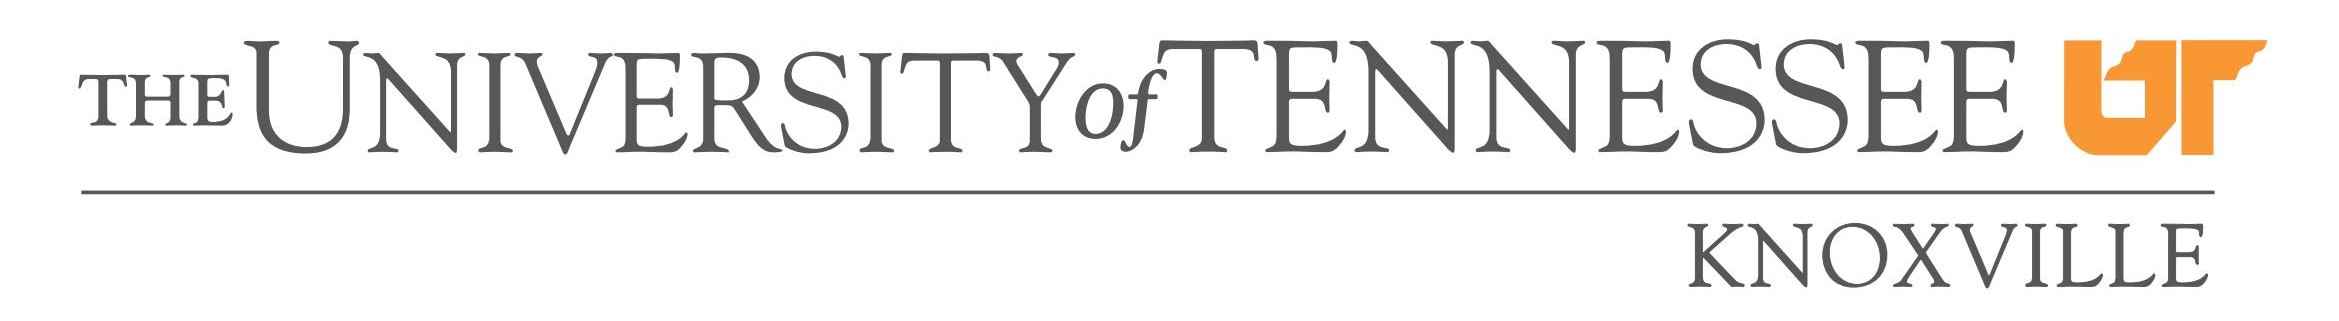 UT Logo - University of Tennessee [utk.edu]